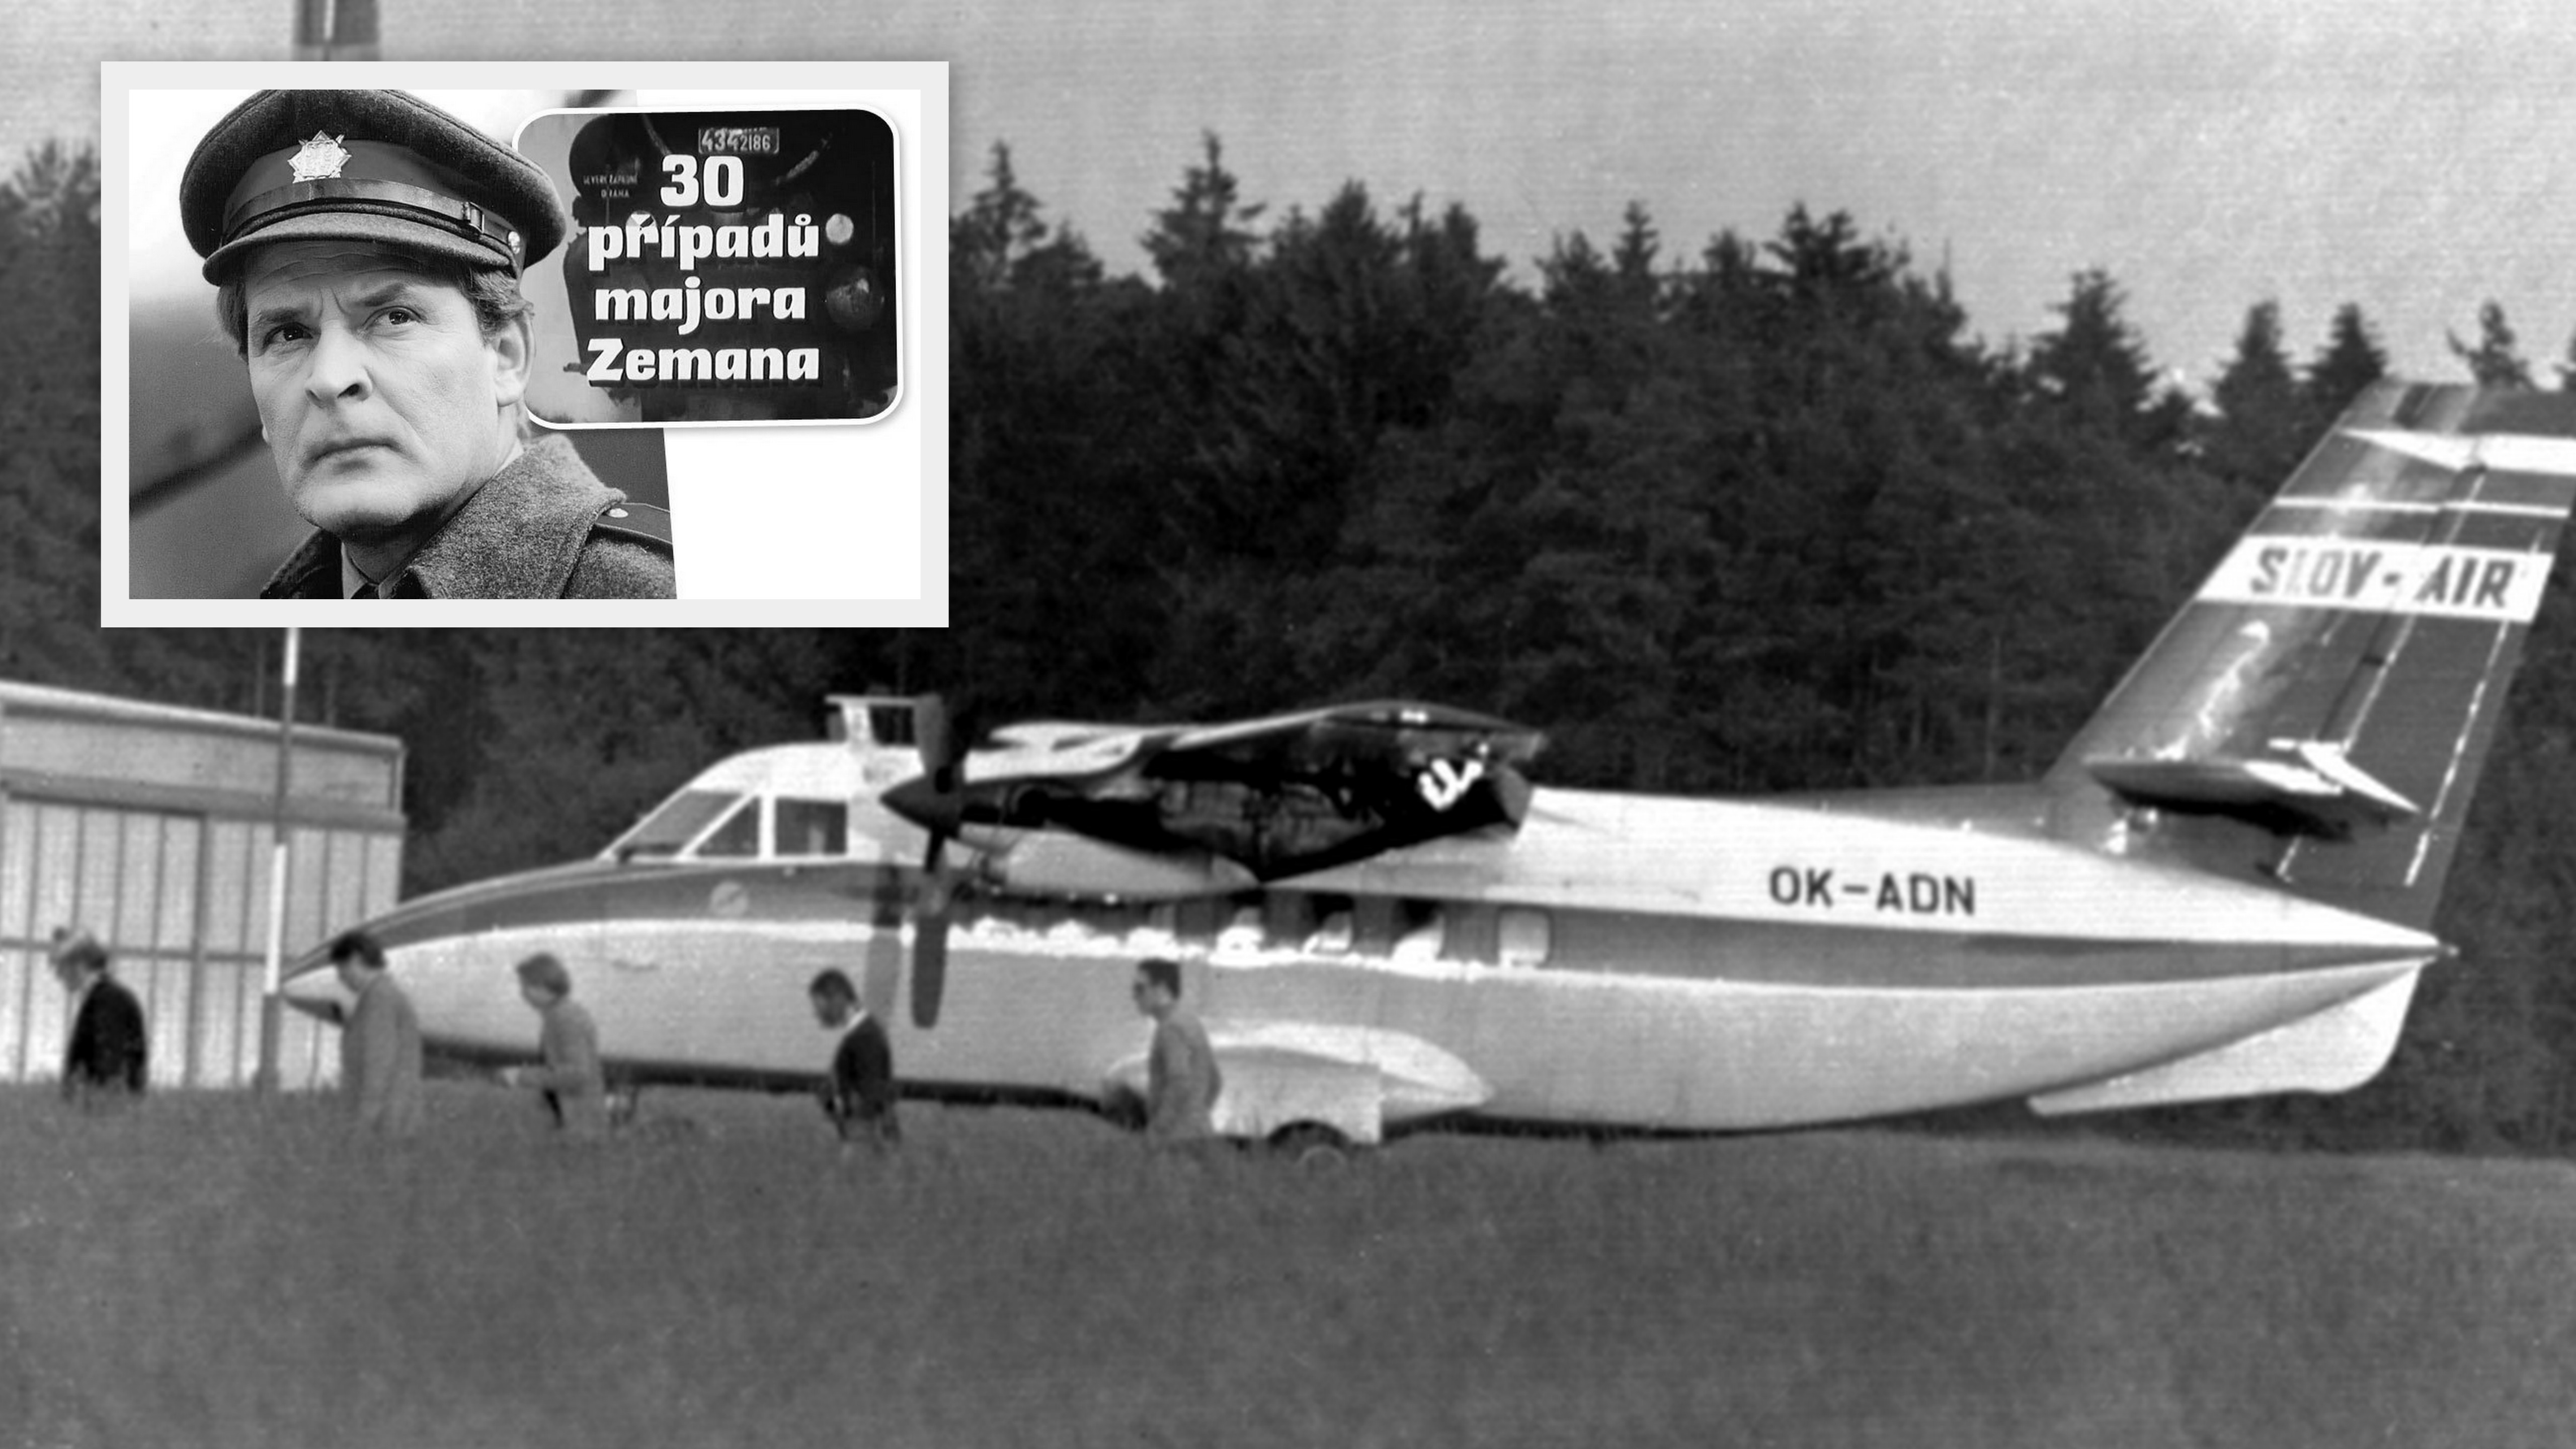 Únos lietadla_1972_Major Zeman_koláž obrázkov